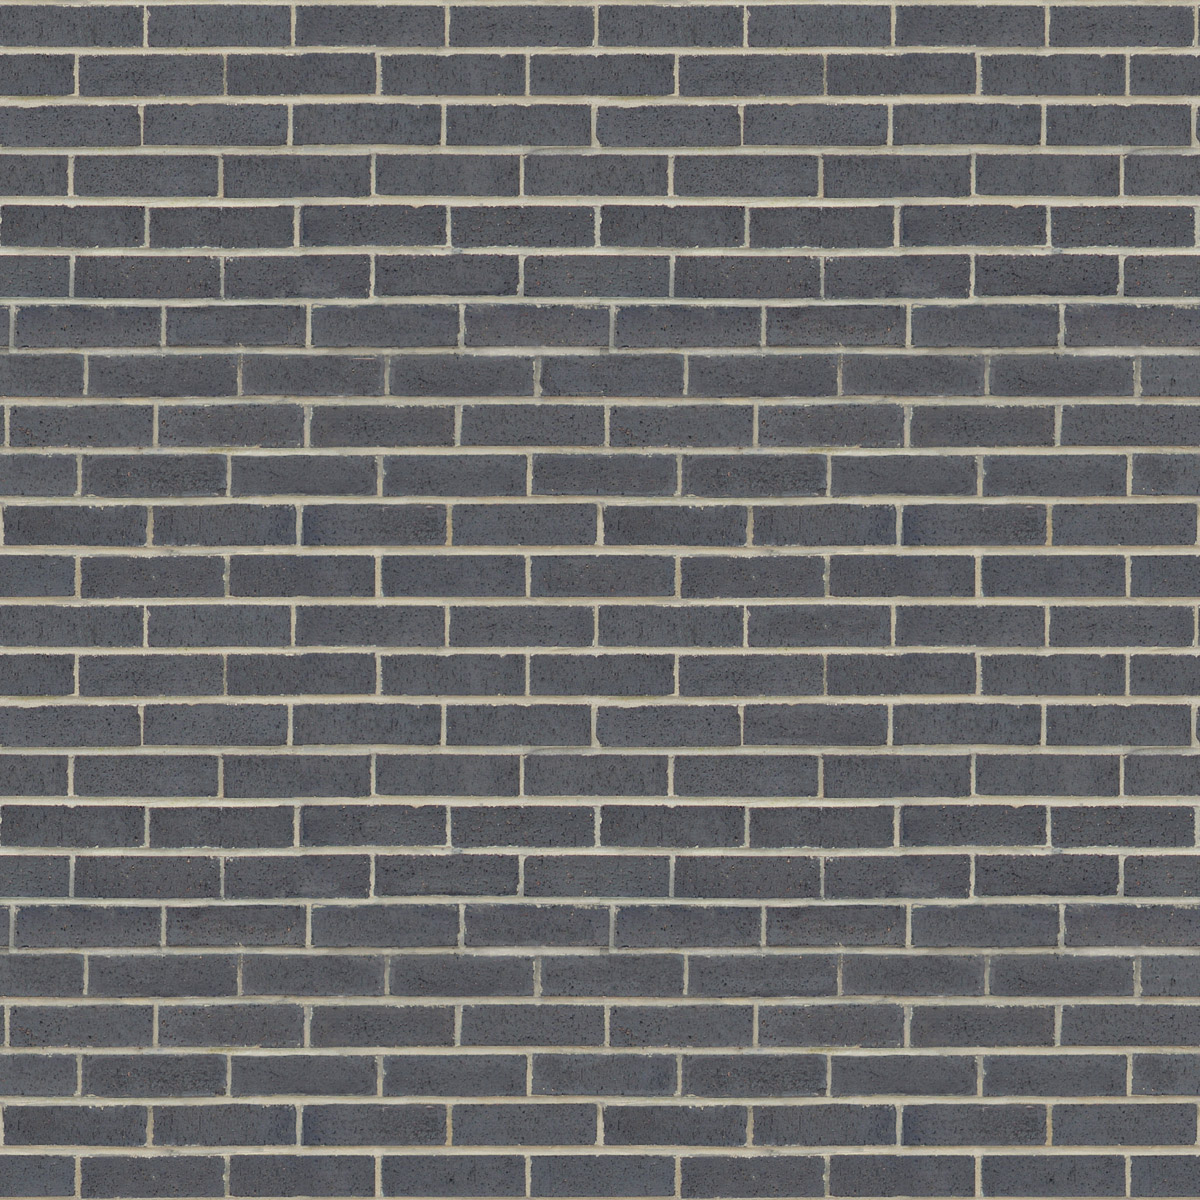 Tileable Grey Brick Wall Texture Maps texturise 1200x1200